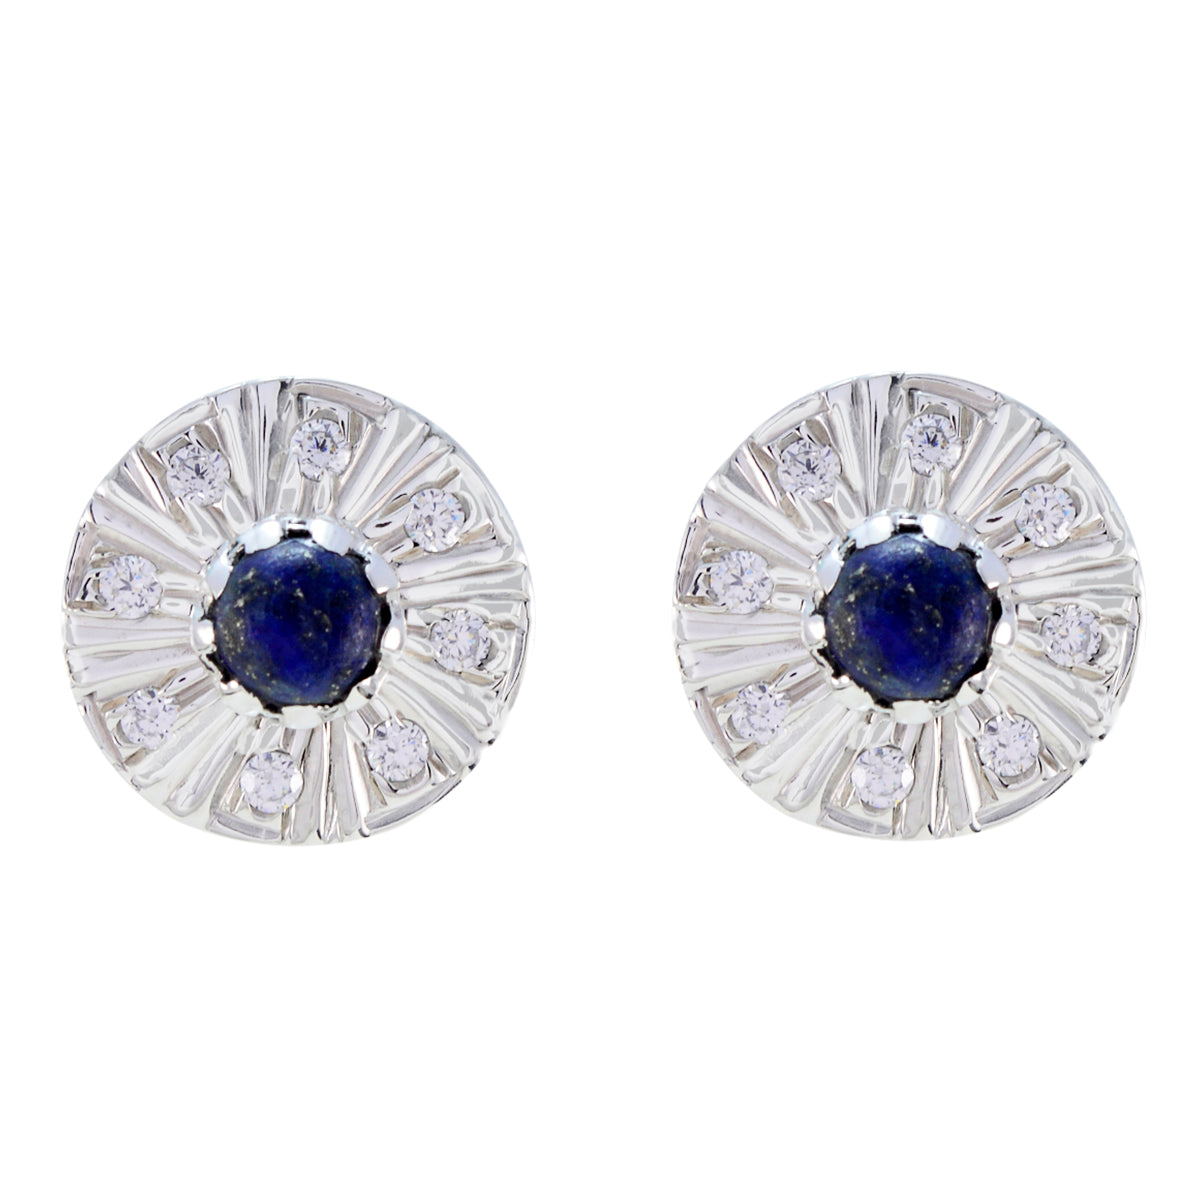 Riyo Nice Gemstone round Cabochon Nevy Blue Lapis Lazuli Silver Earring gift for graduation